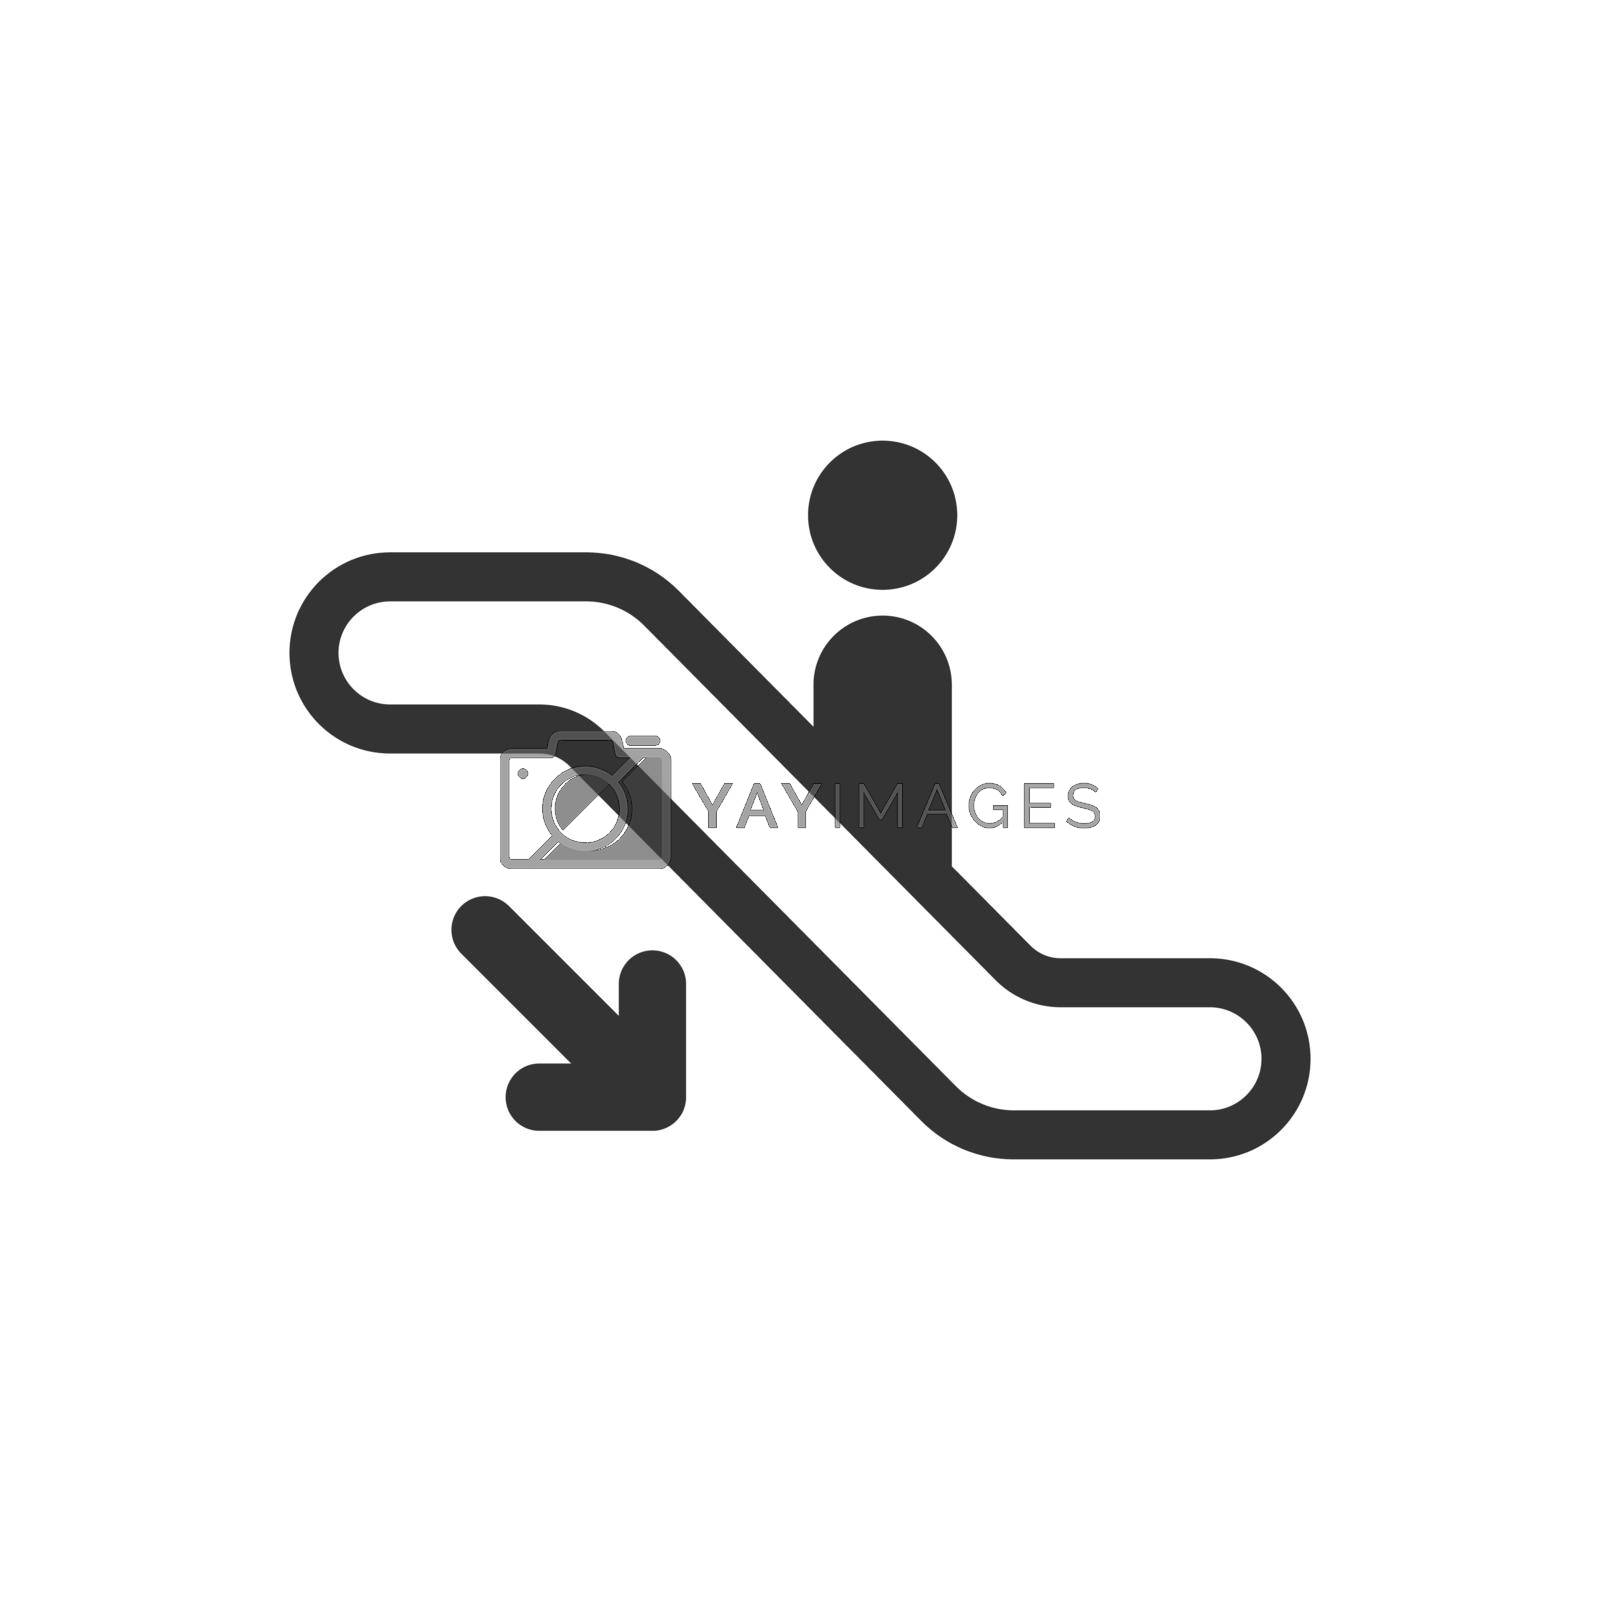 Royalty free image of Escalator elevator icon. Vector illustration. Business concept escalator pictogram. by LysenkoA